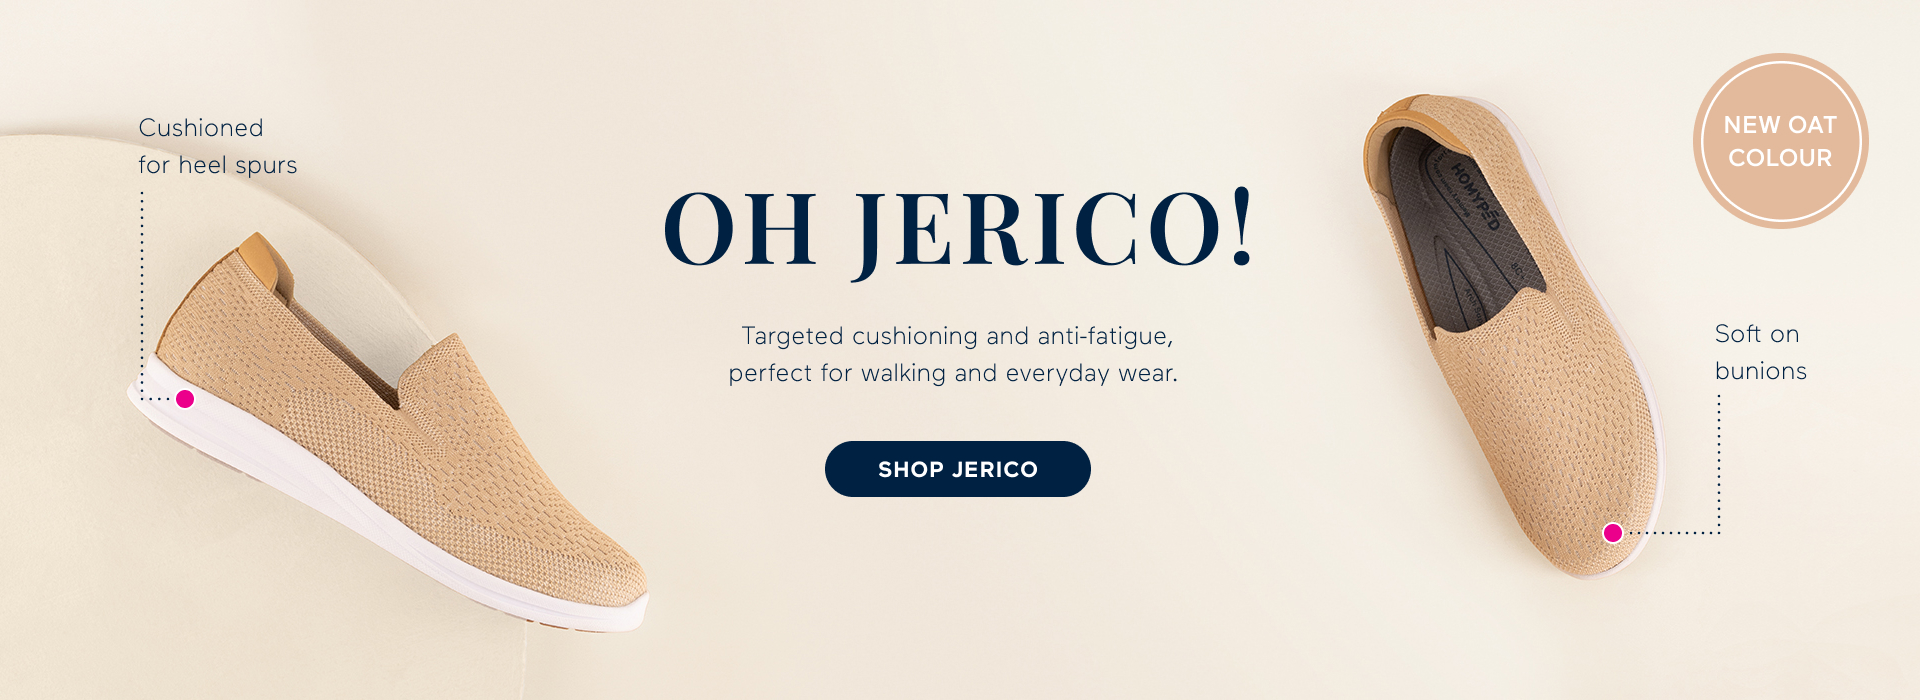 Jerico womens walking shoes